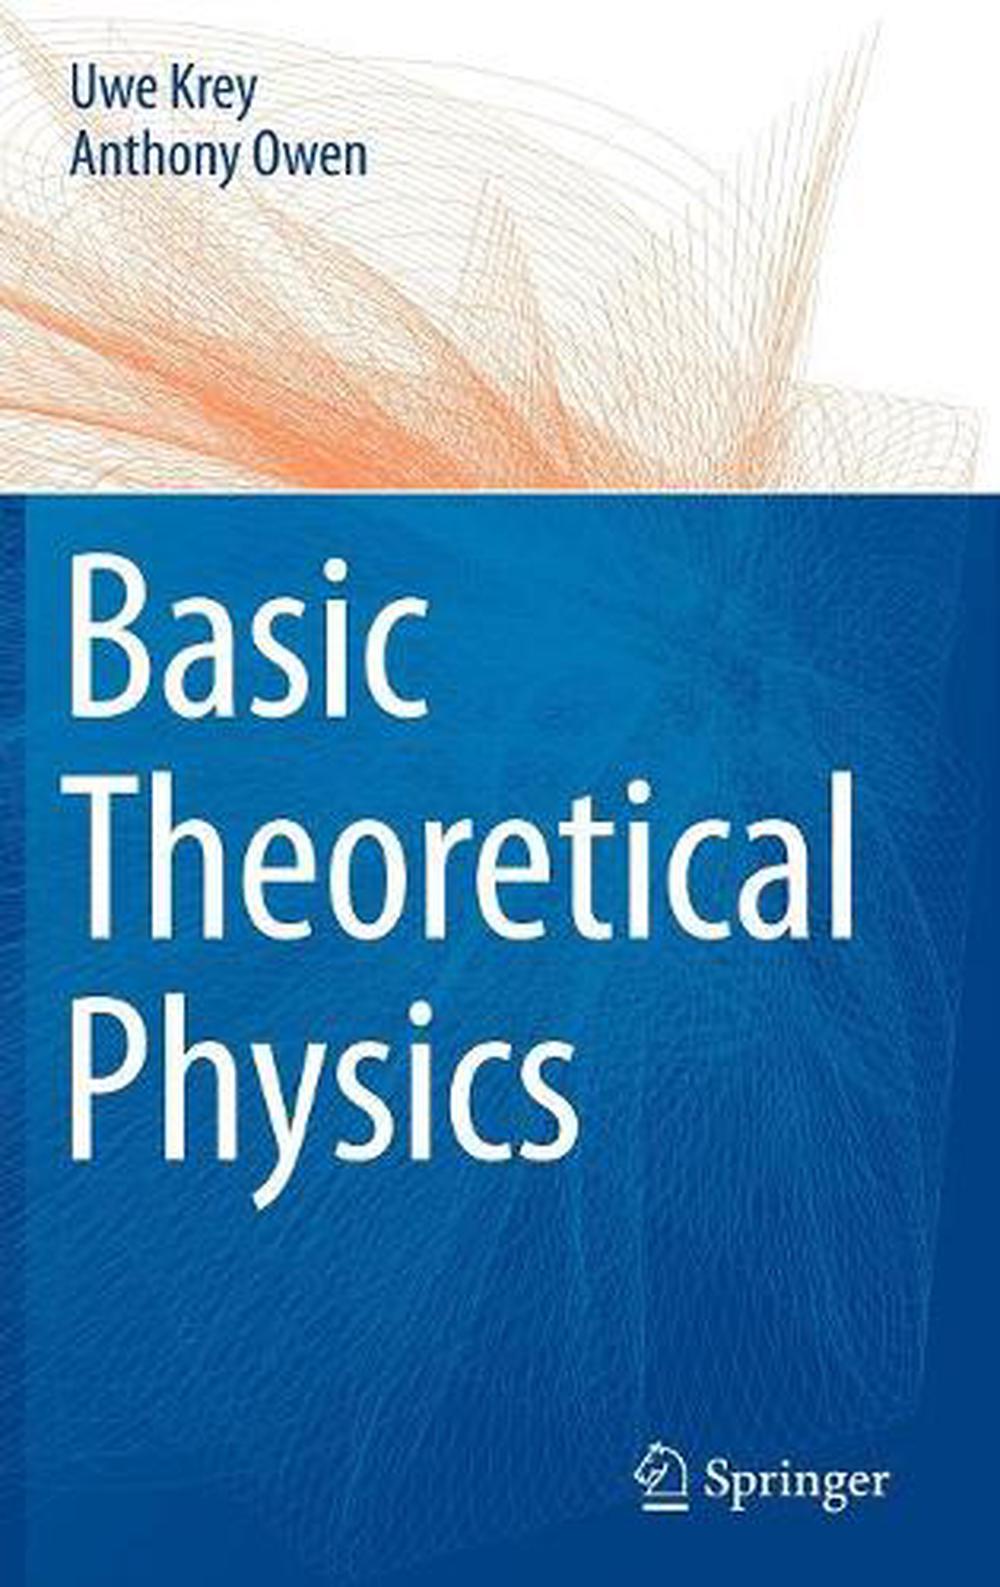 harvard phd theoretical physics